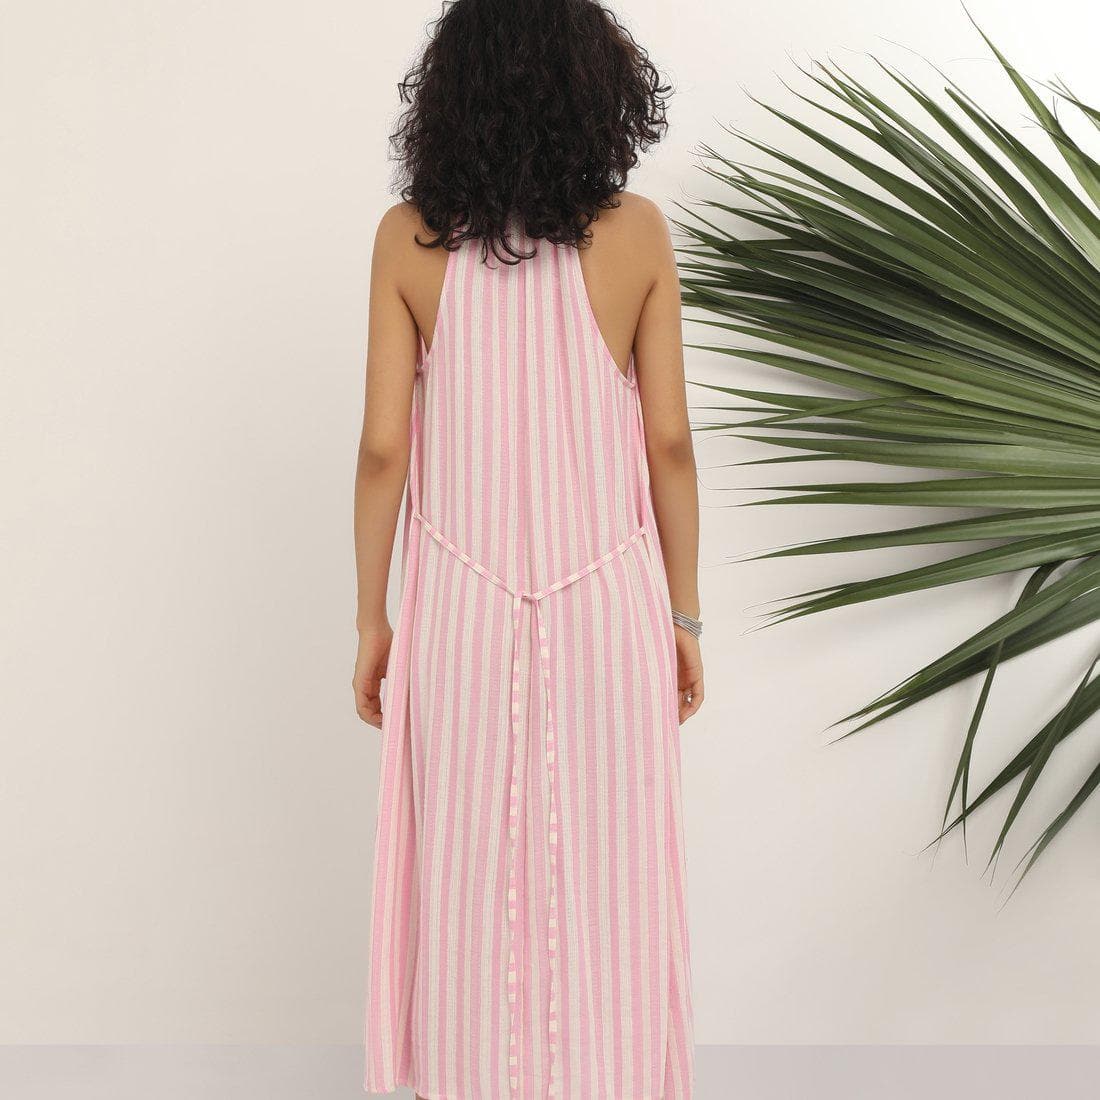 Pradee Dress - Pink Stripe